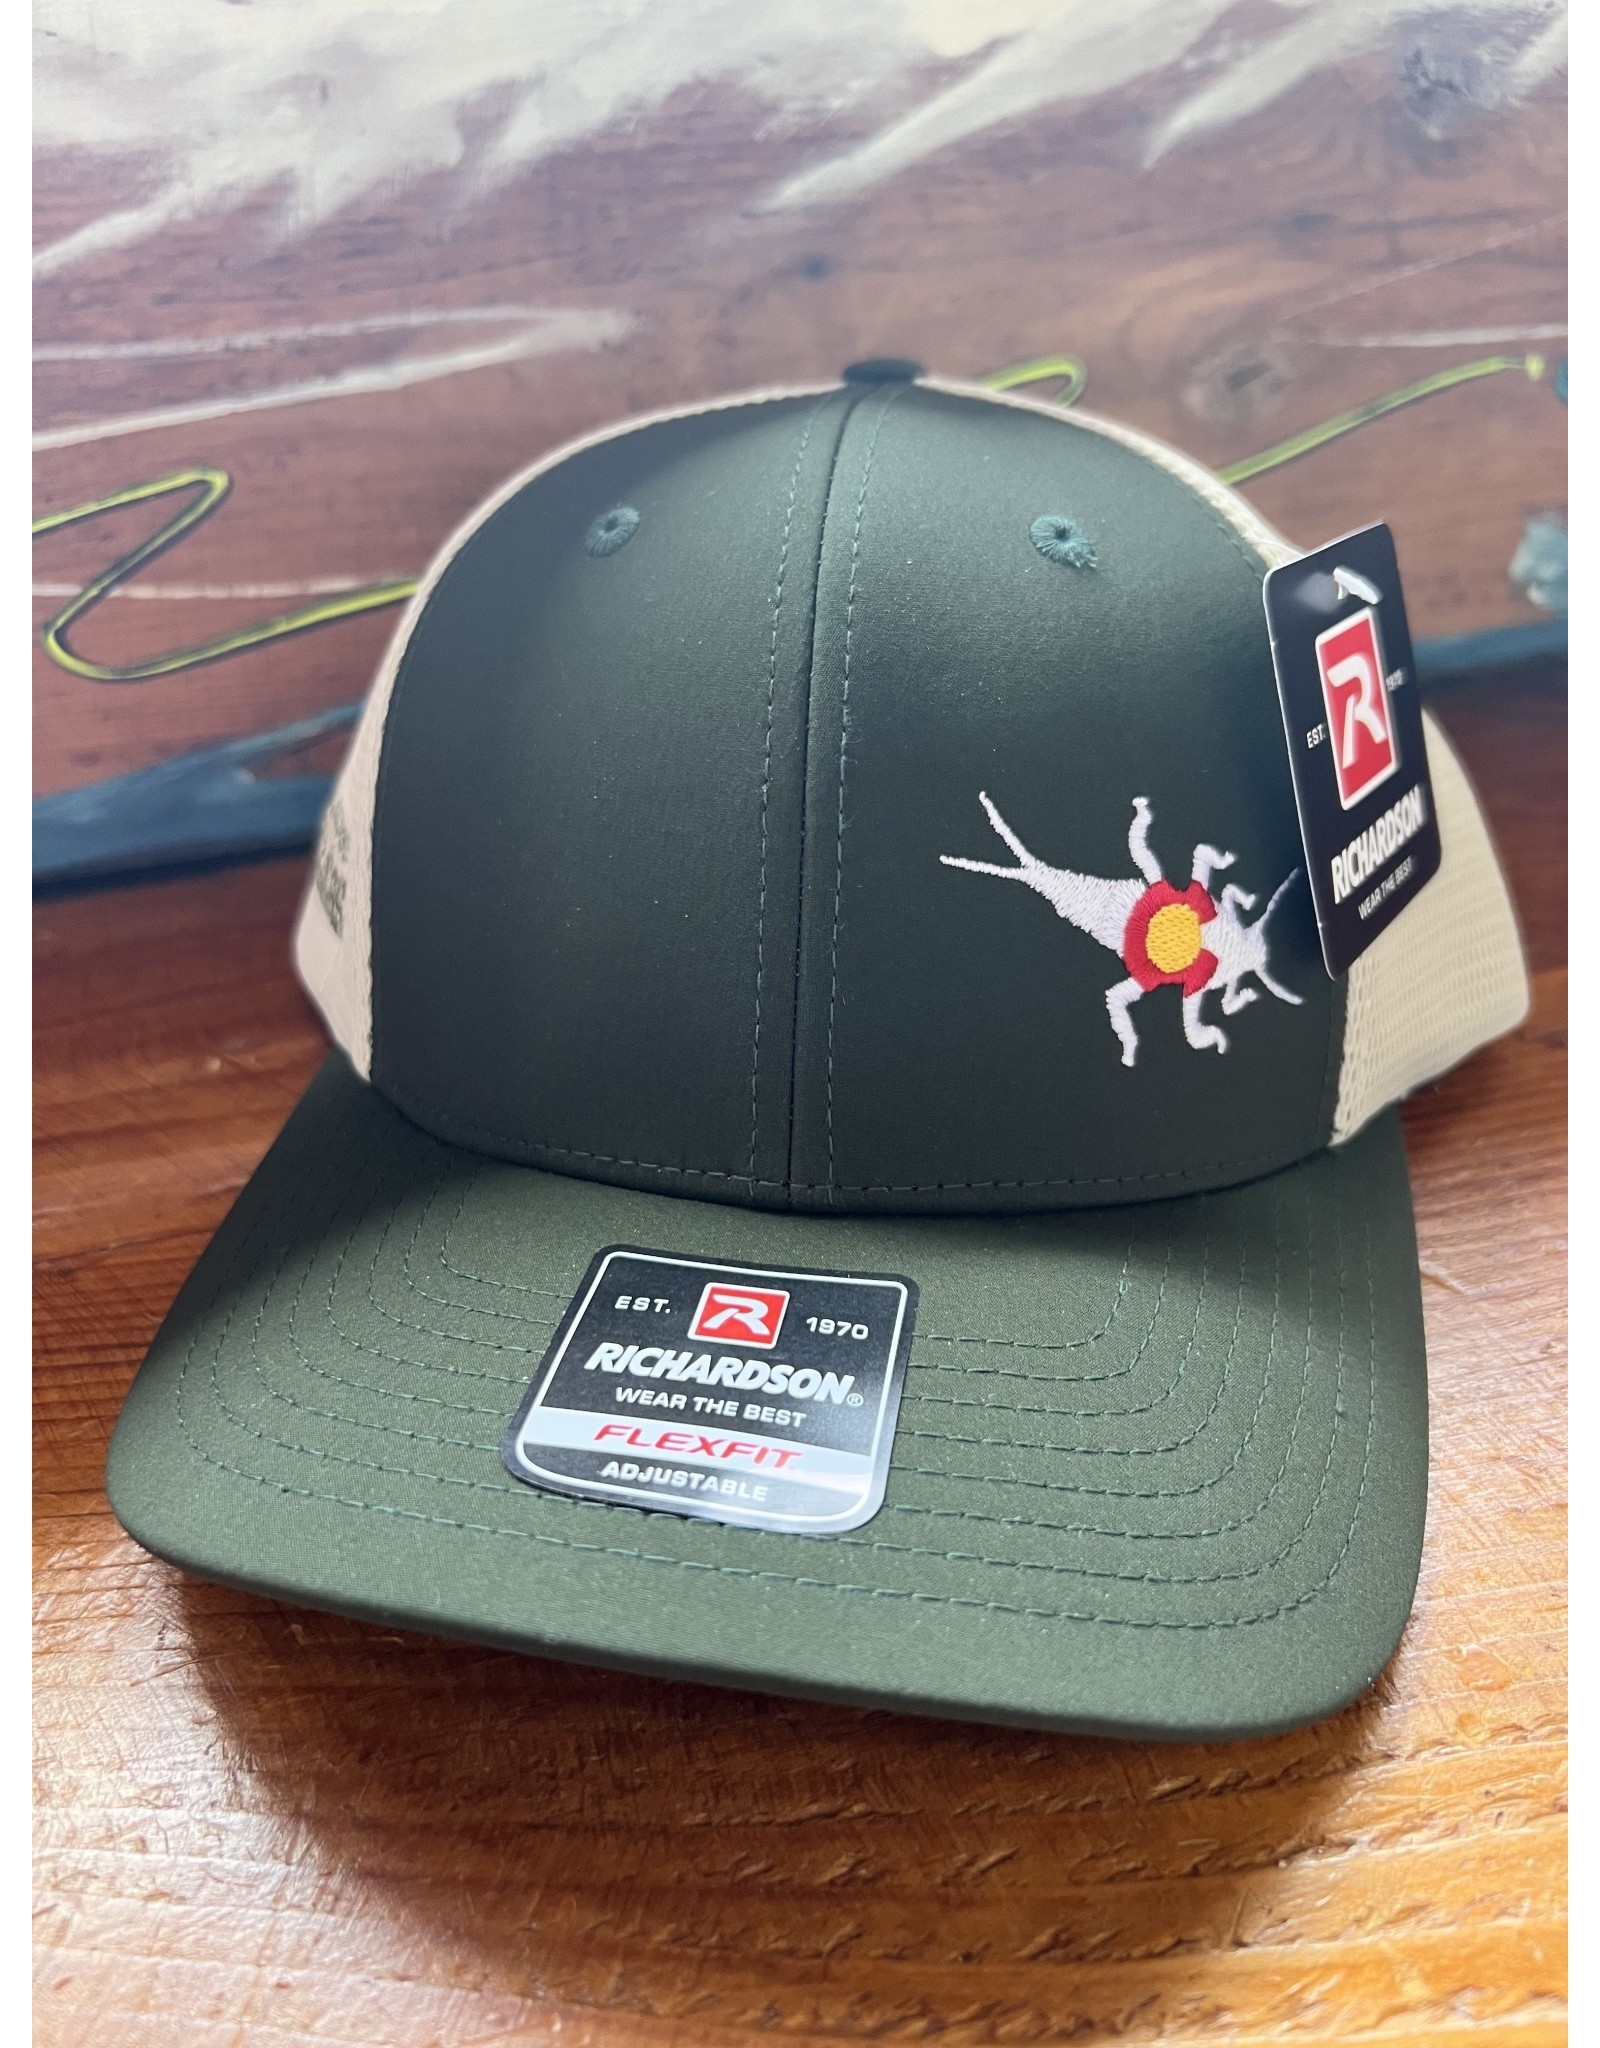 Richardson RGA Stonebug Flexfit Trucker Hat (Spruce/ Khaki)